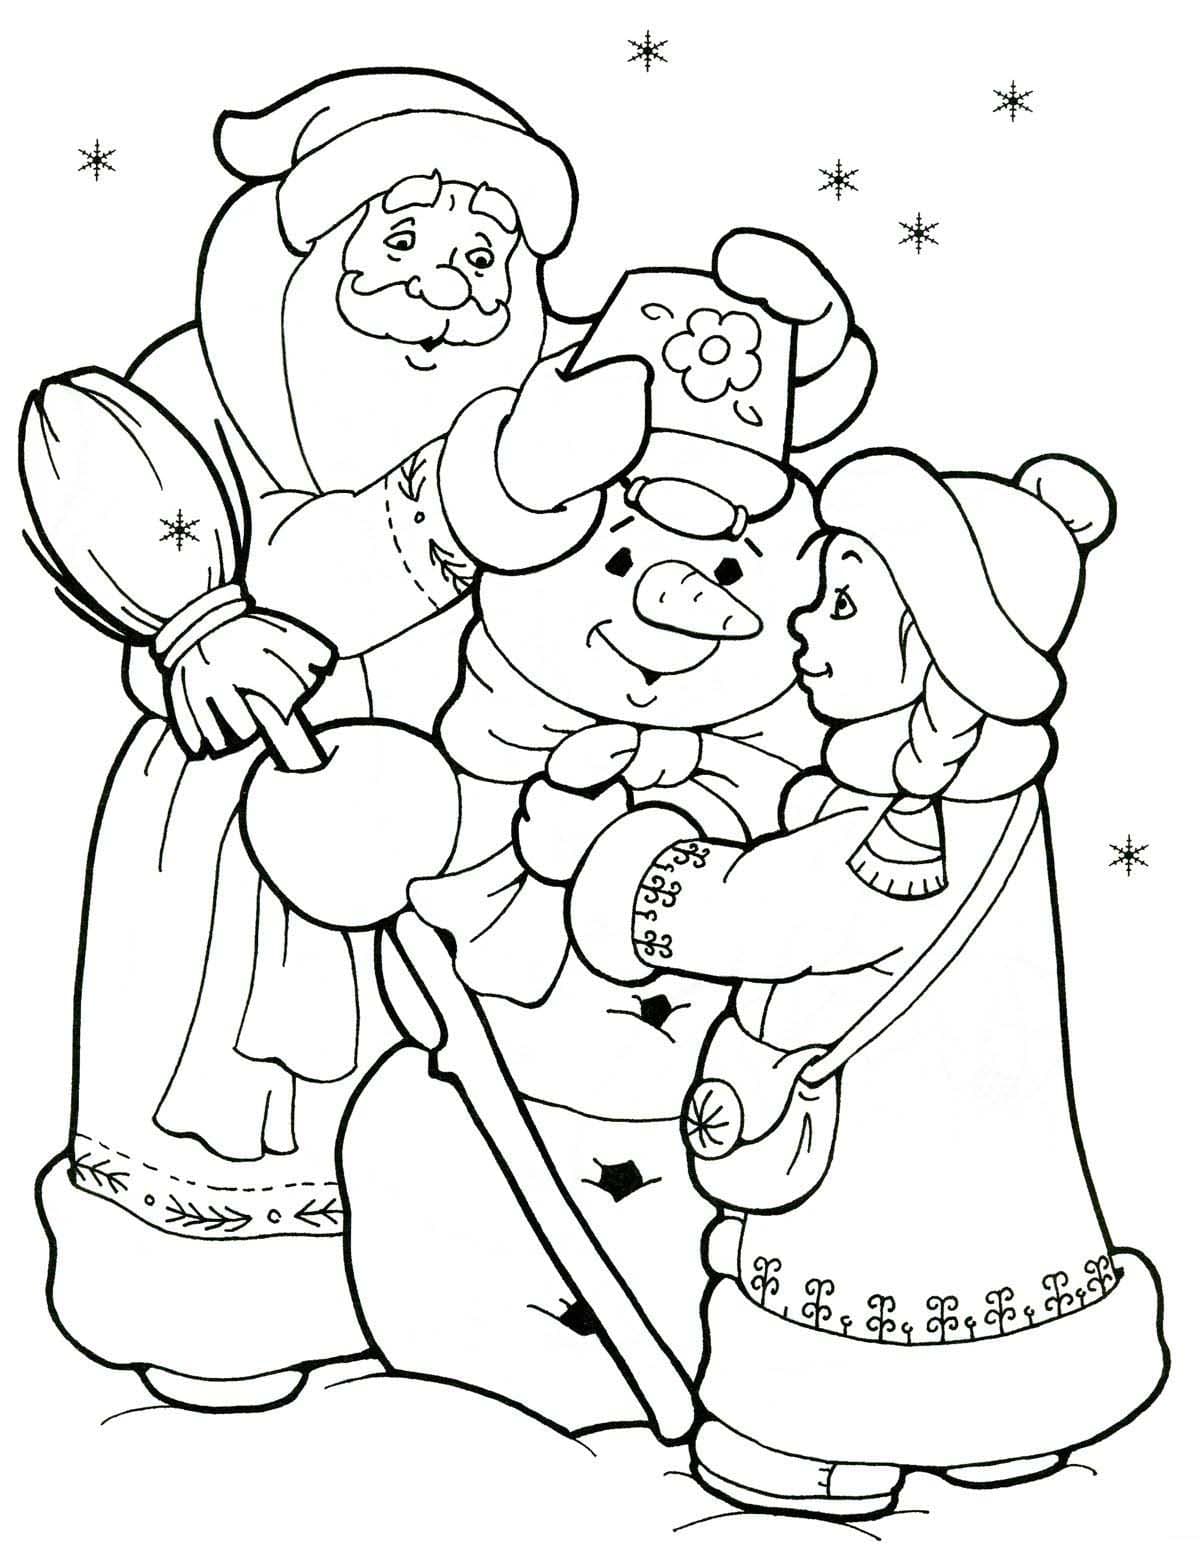 Раскраски Дед Мороз и Снегурочка. Раскраска 4